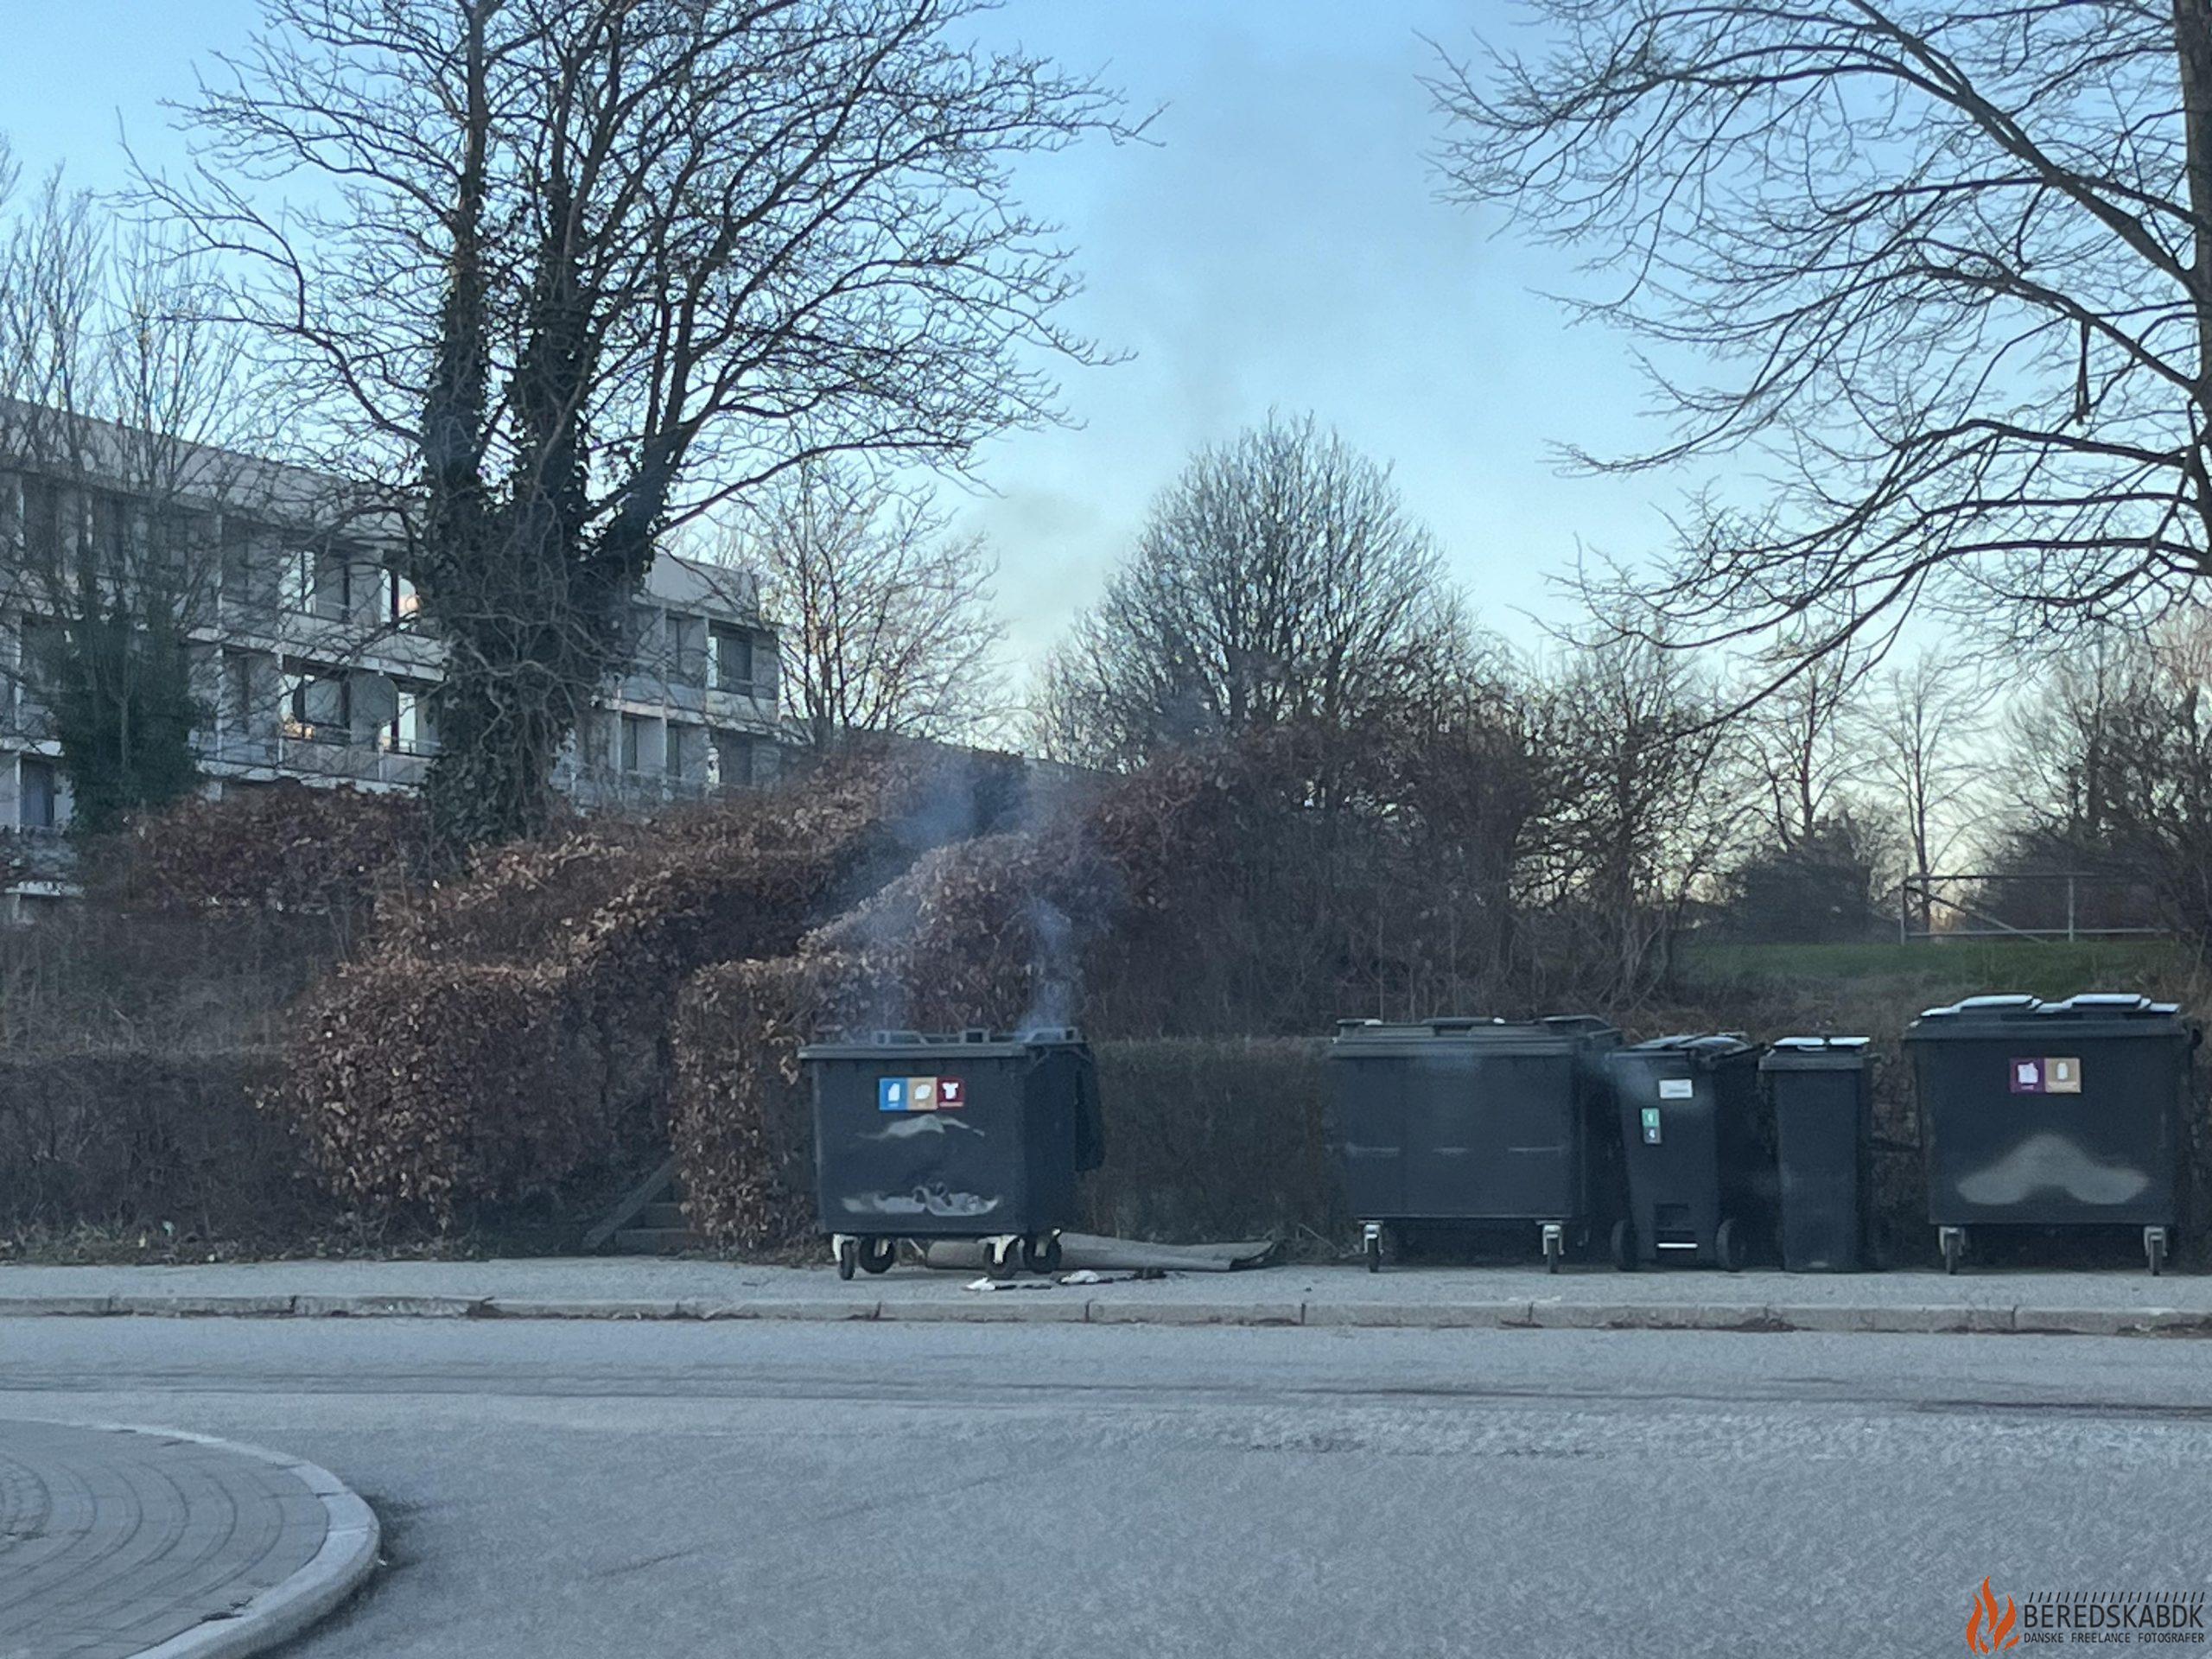 17/02-24 Brand i container på Jettesvej, 8220 Brabrand